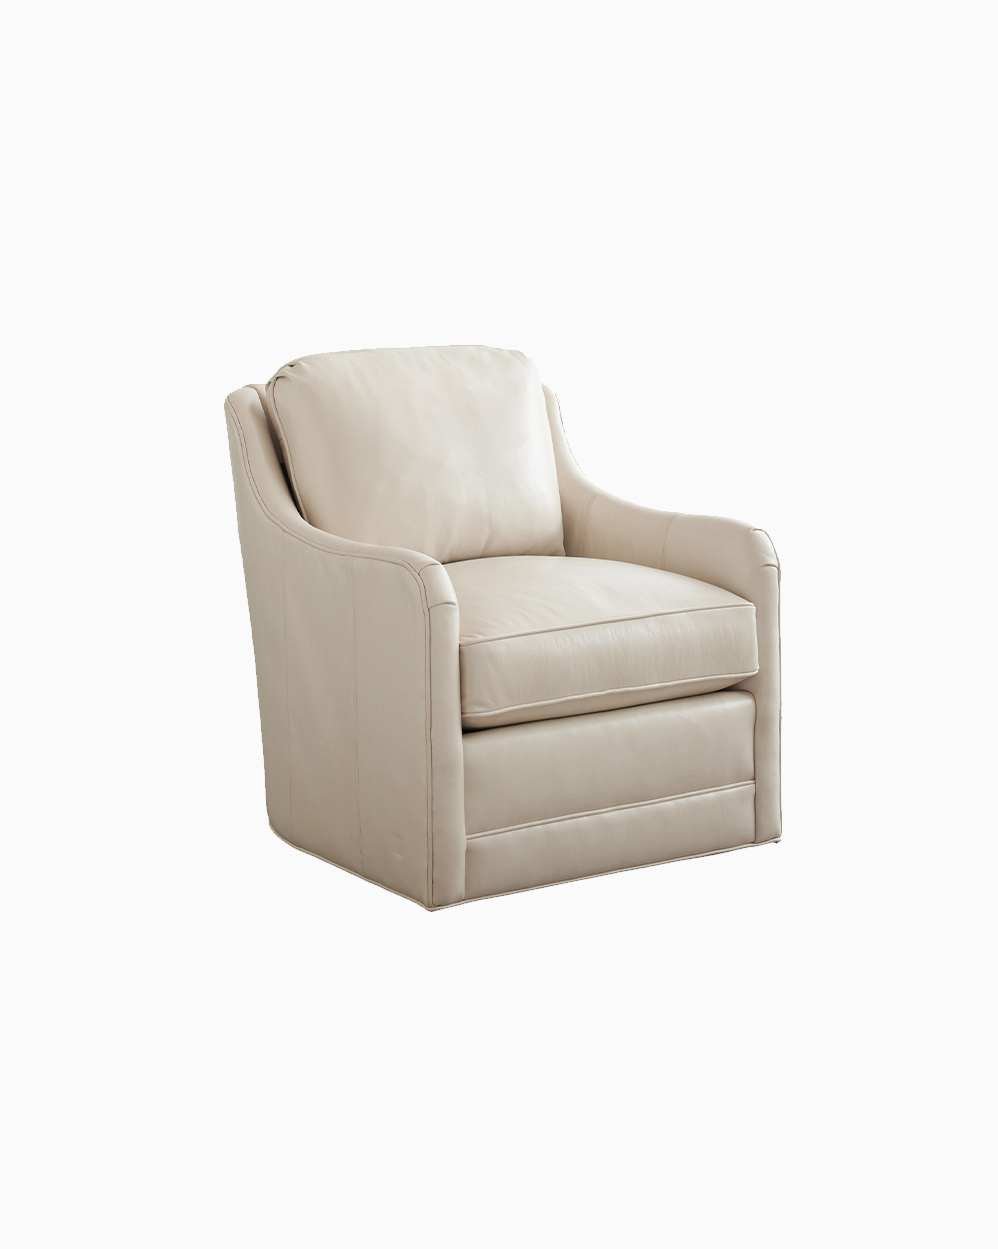 Glenhaven Leather Swivel Chair